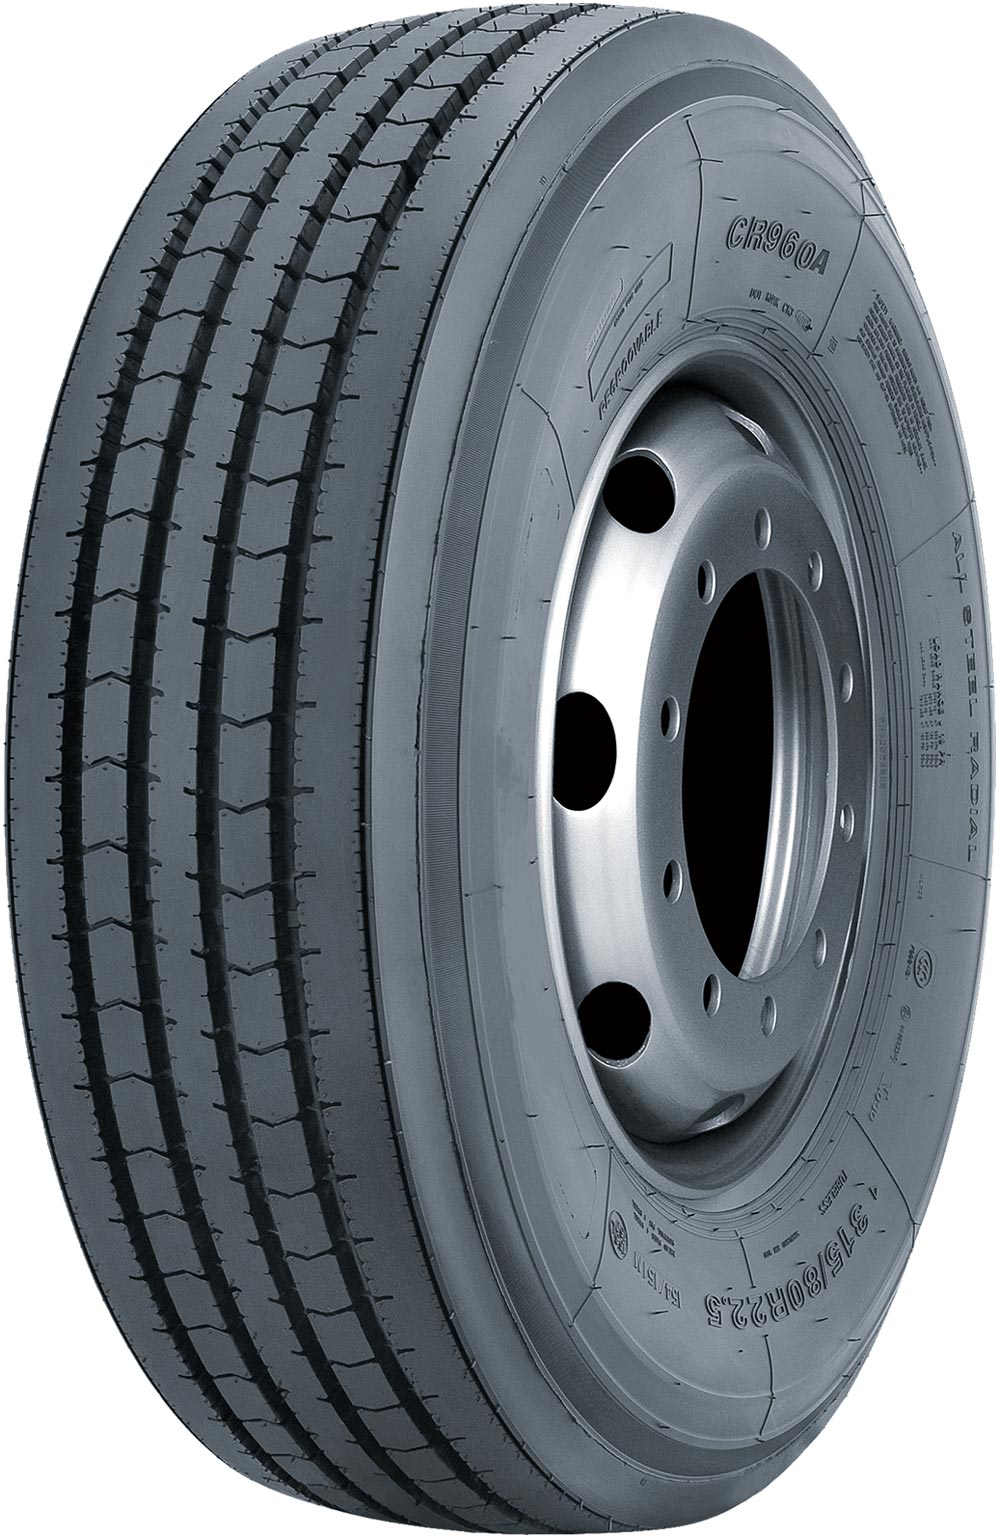 product_type-heavy_tires GOODRIDE CR960A 16PR 215/75 R17.5 135J